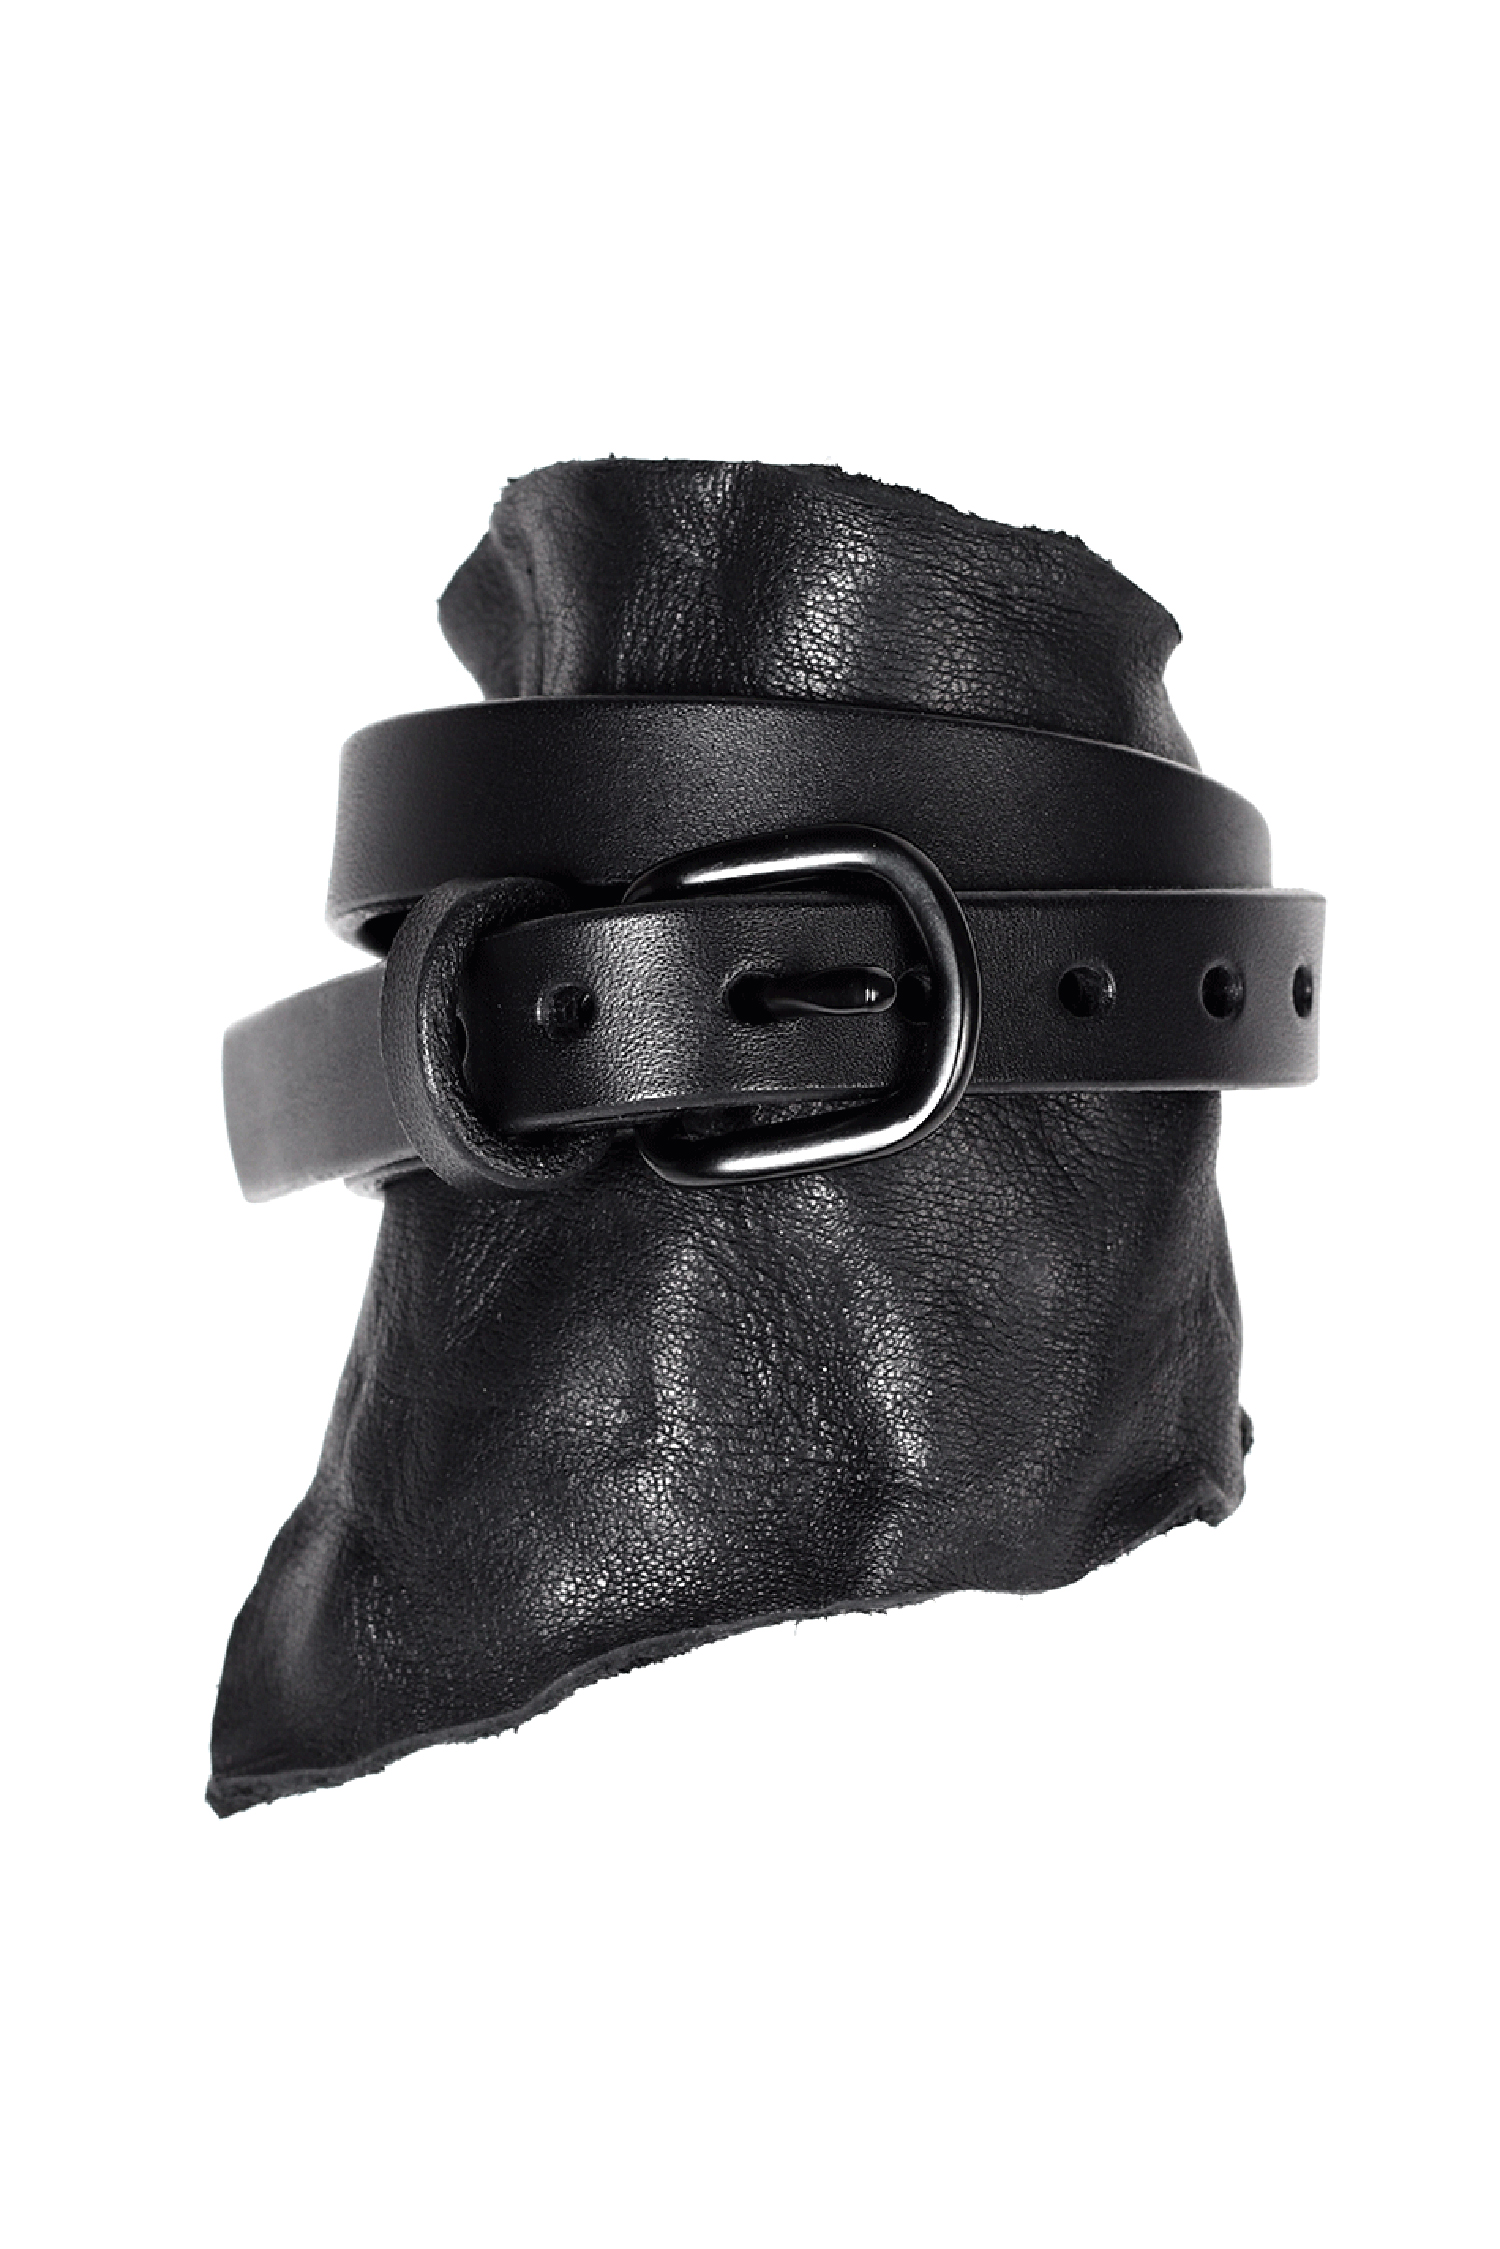 Leather bracelet - black - Klis